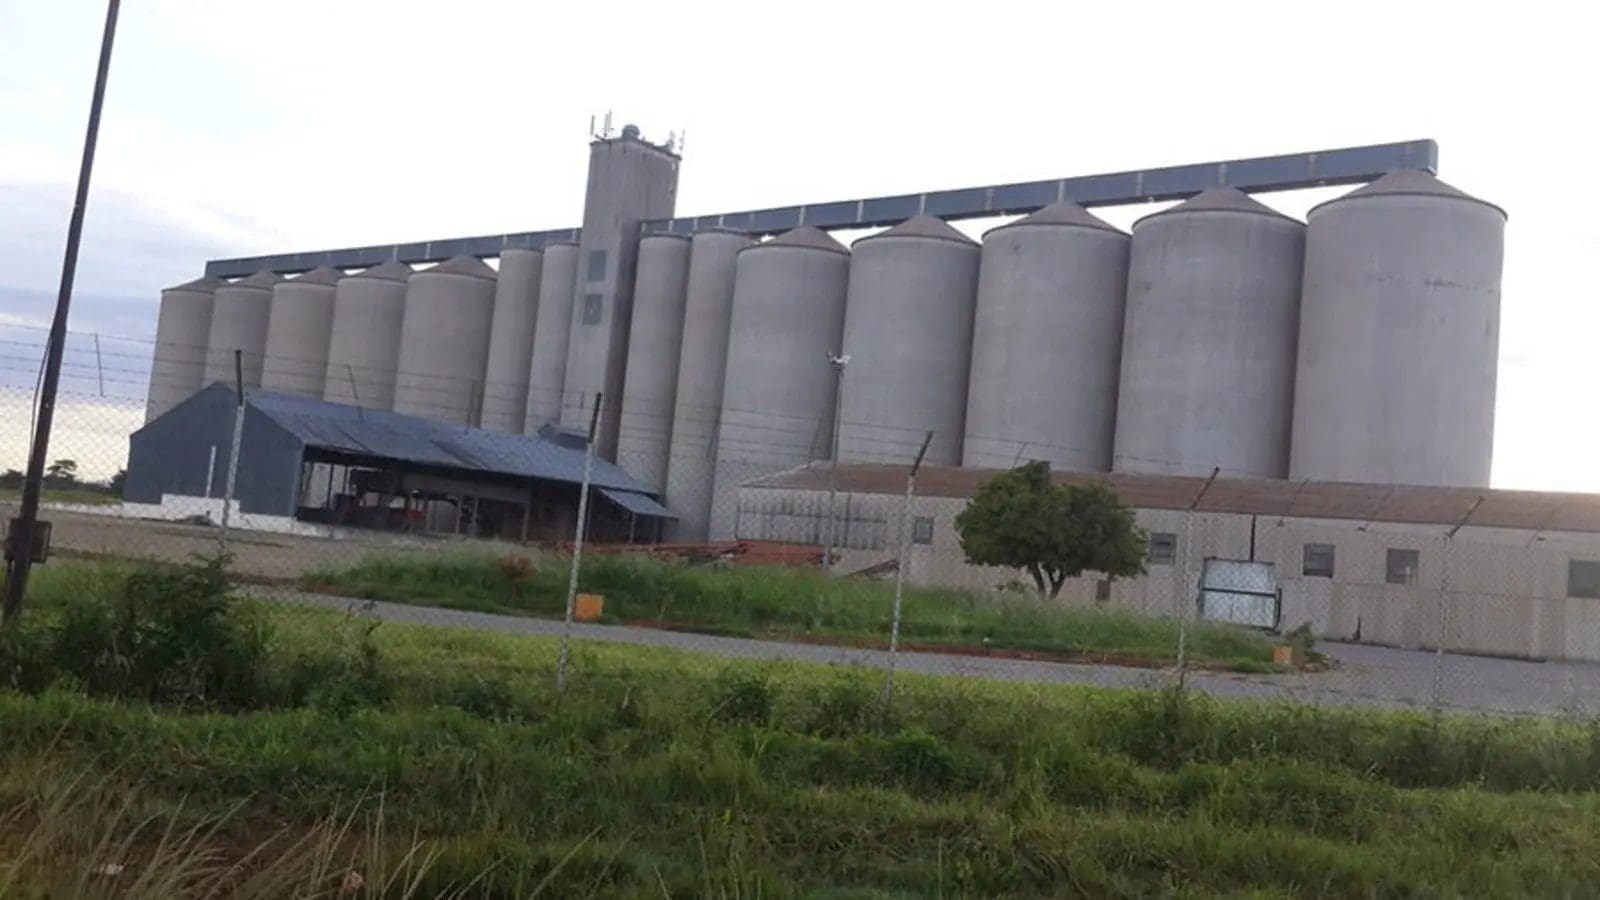 Zimbabwe Grain Marketing Board to build US$112M grain silos with Belarusian support